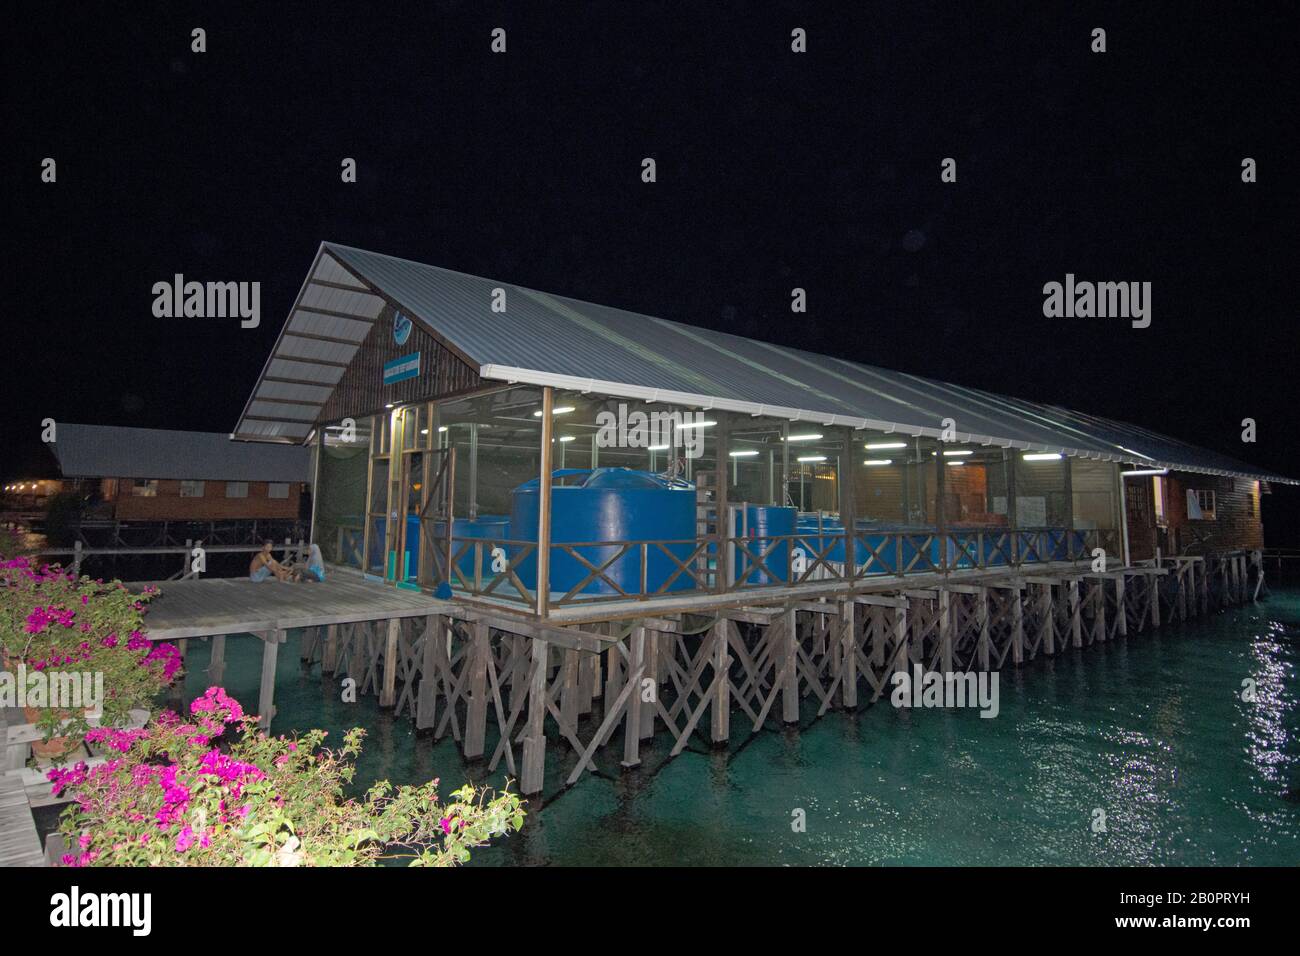 Aquaculture Reef Station of the Kapalai Dive Resort, Kapalai, Malaysia Stock Photo